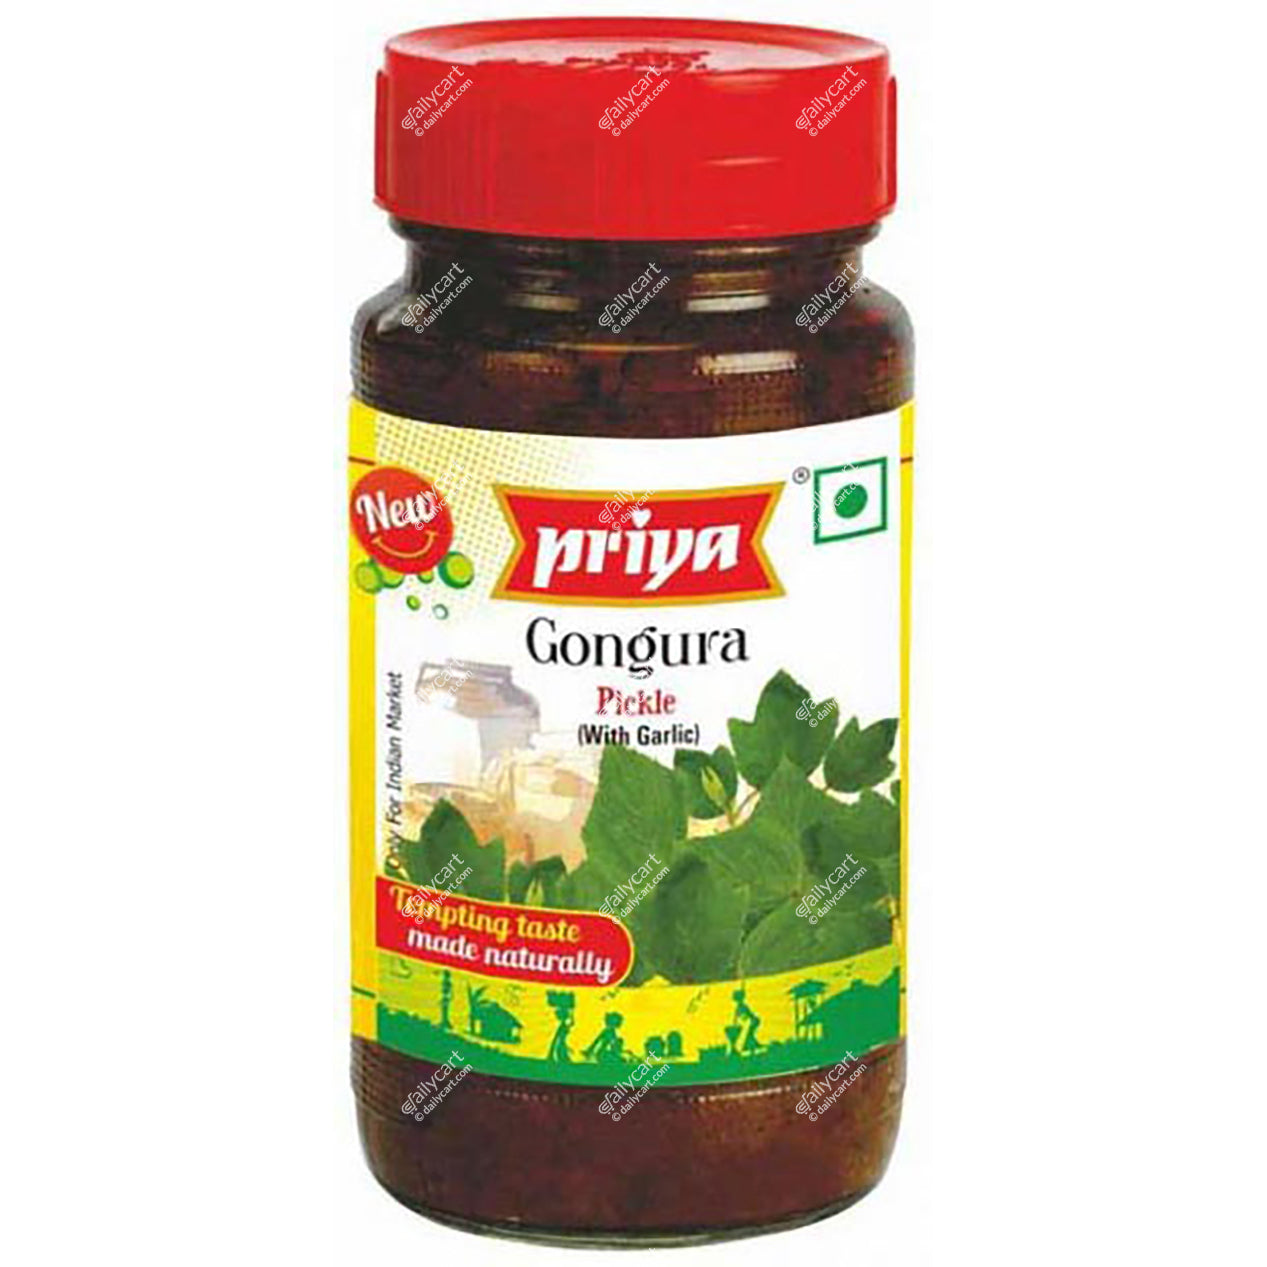 Priya Gongura Pickle With Garlic, 300 g